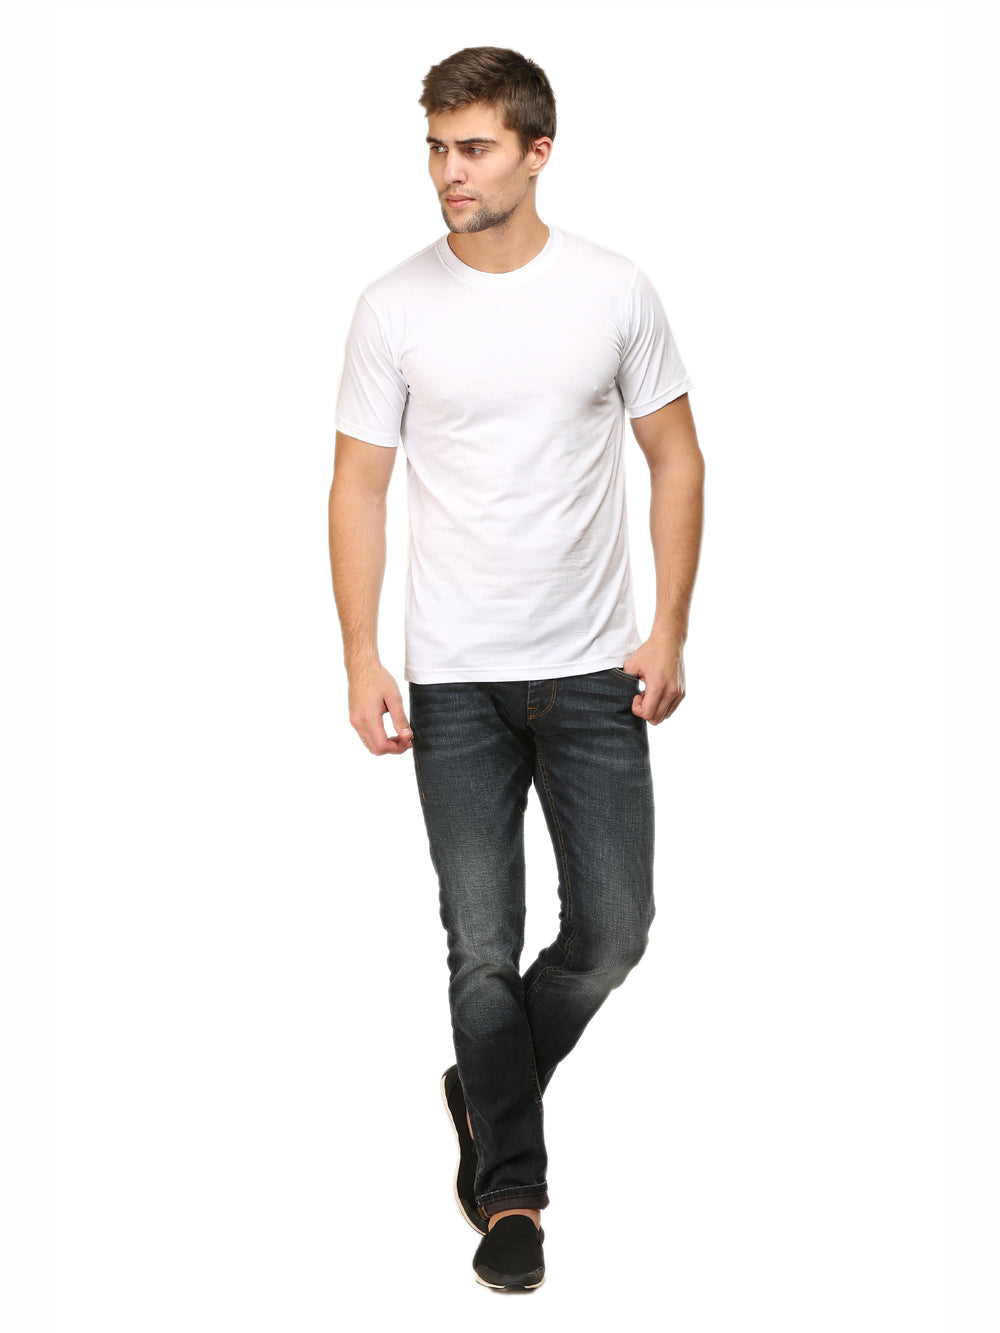 Solids : Premium White Unisex T -shirt